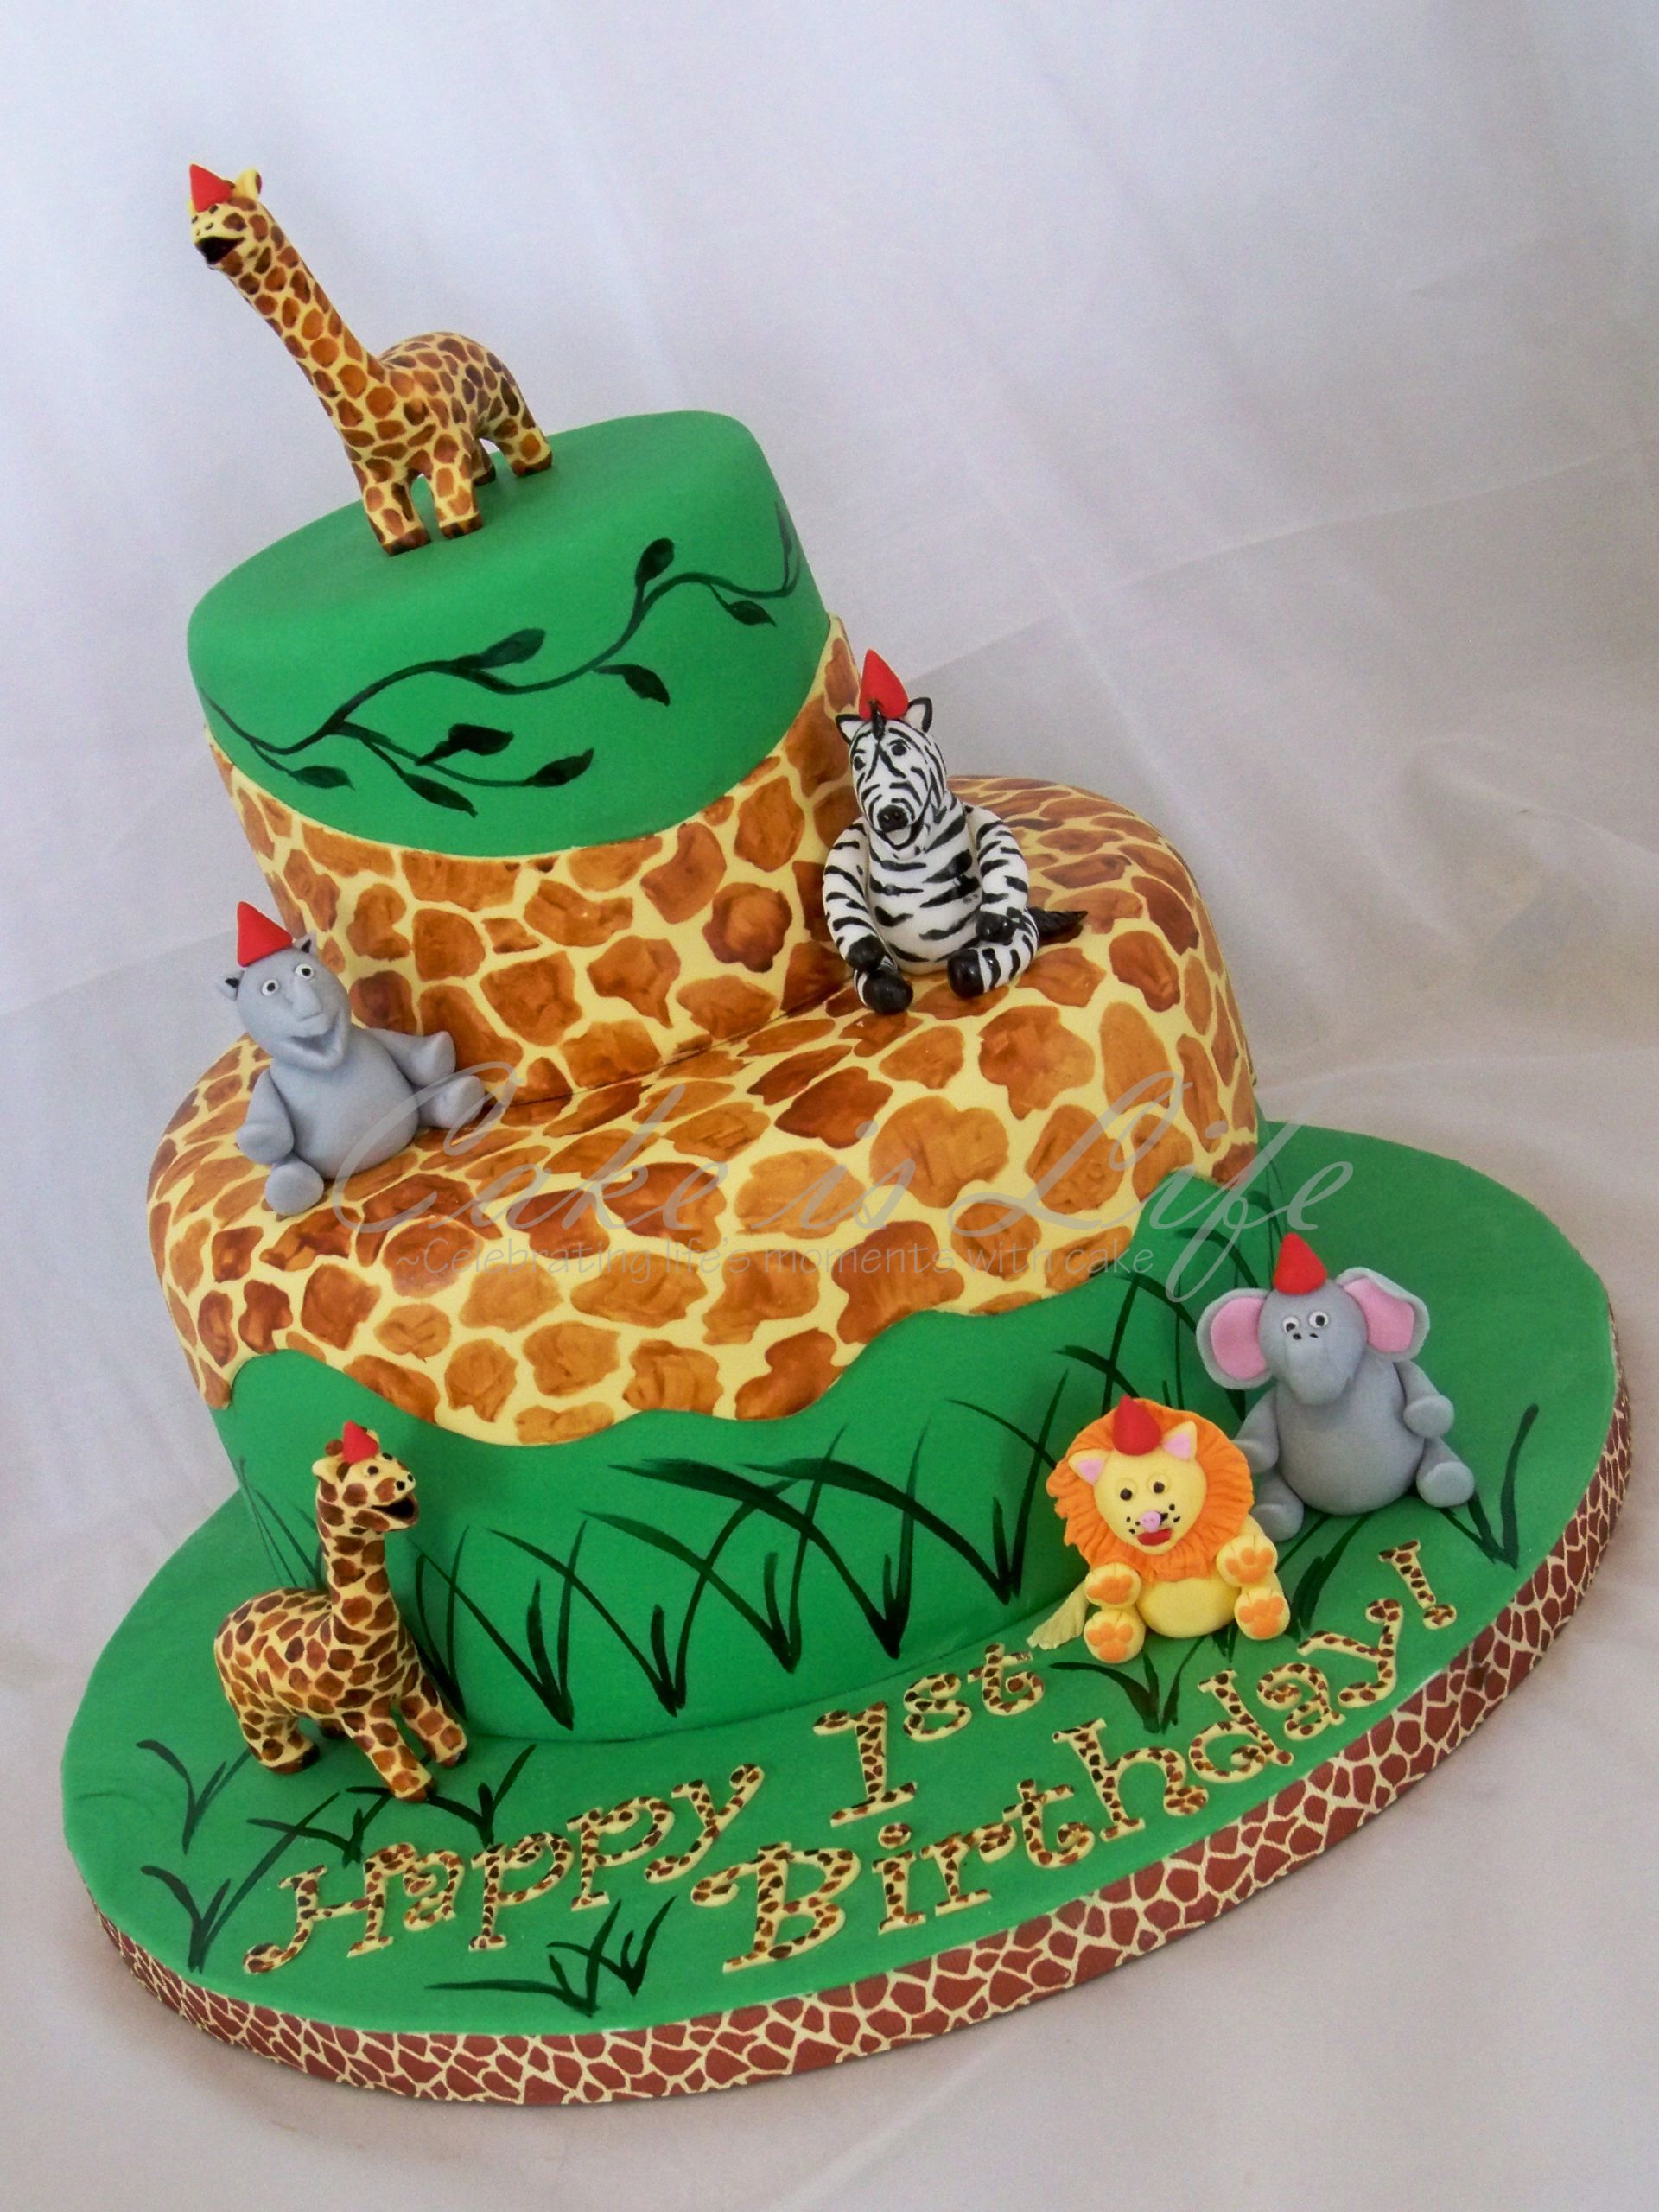 Giraffe Birthday Cake
 Giraffe